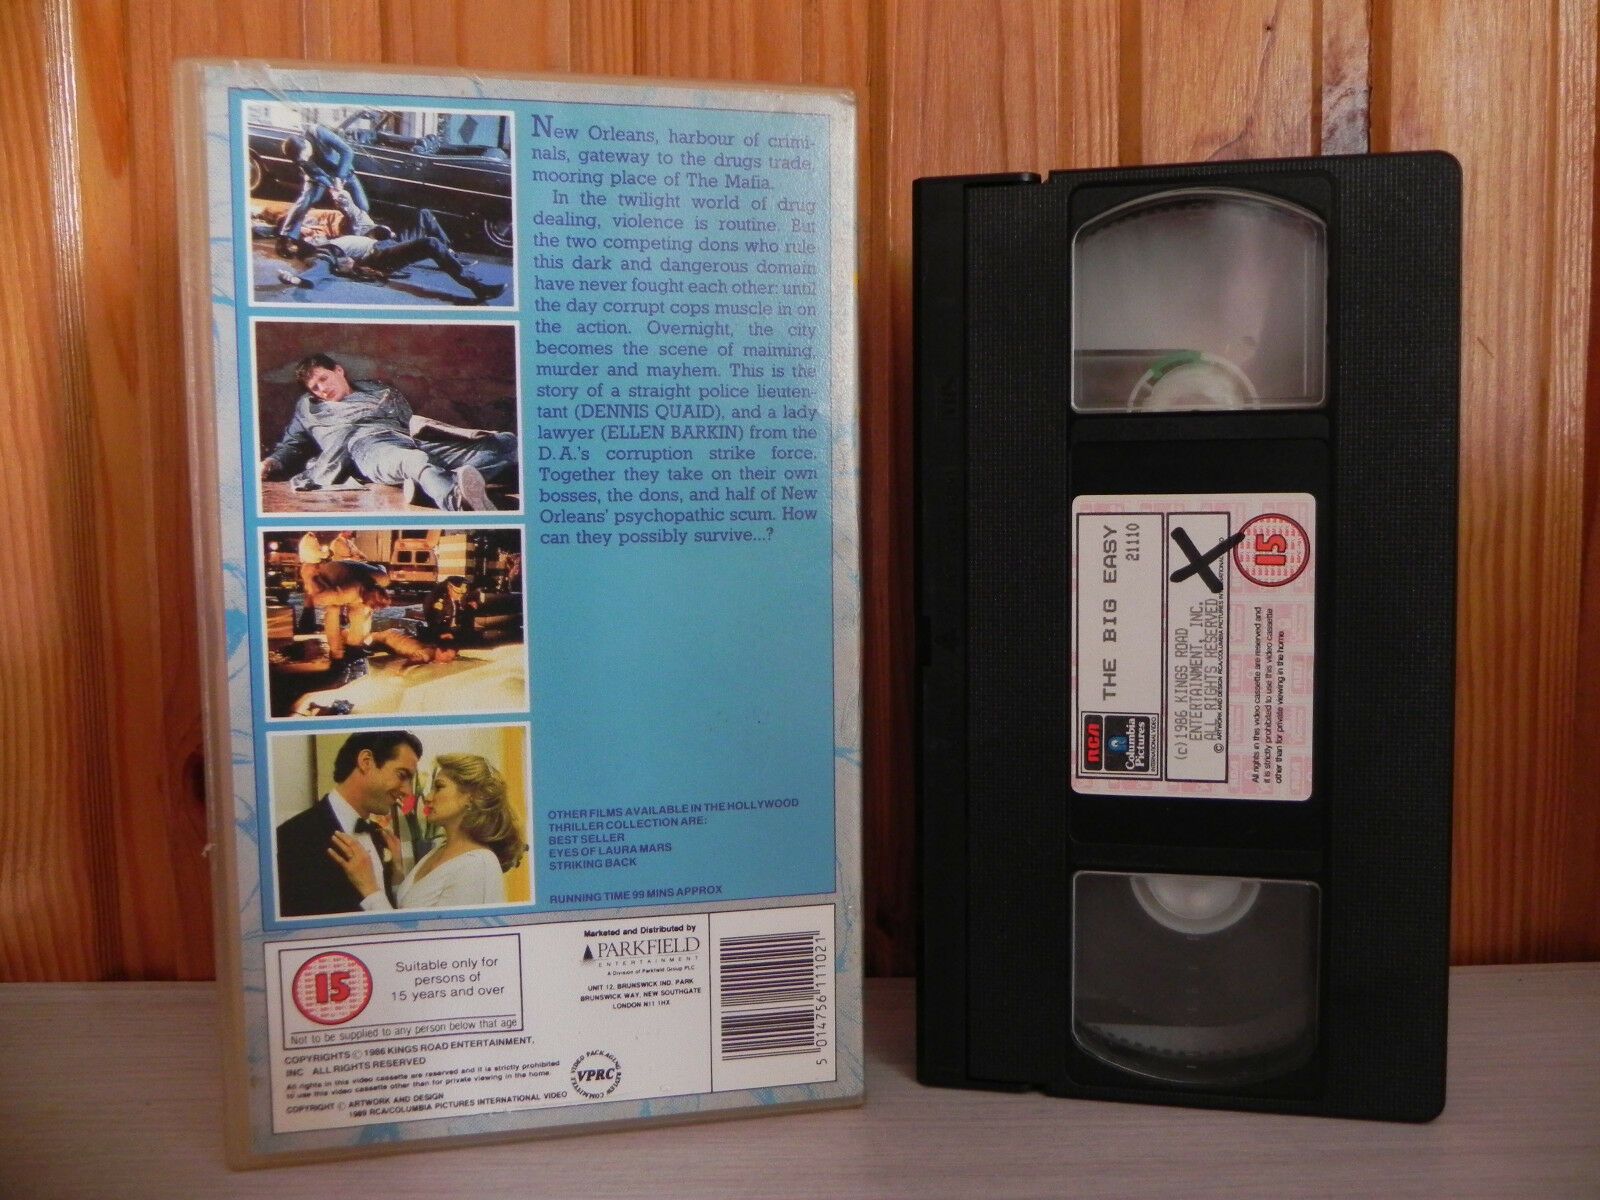 The Big Easy (1986) - Internal Affairs - Police Action - Dennis Quaid - Pal VHS-